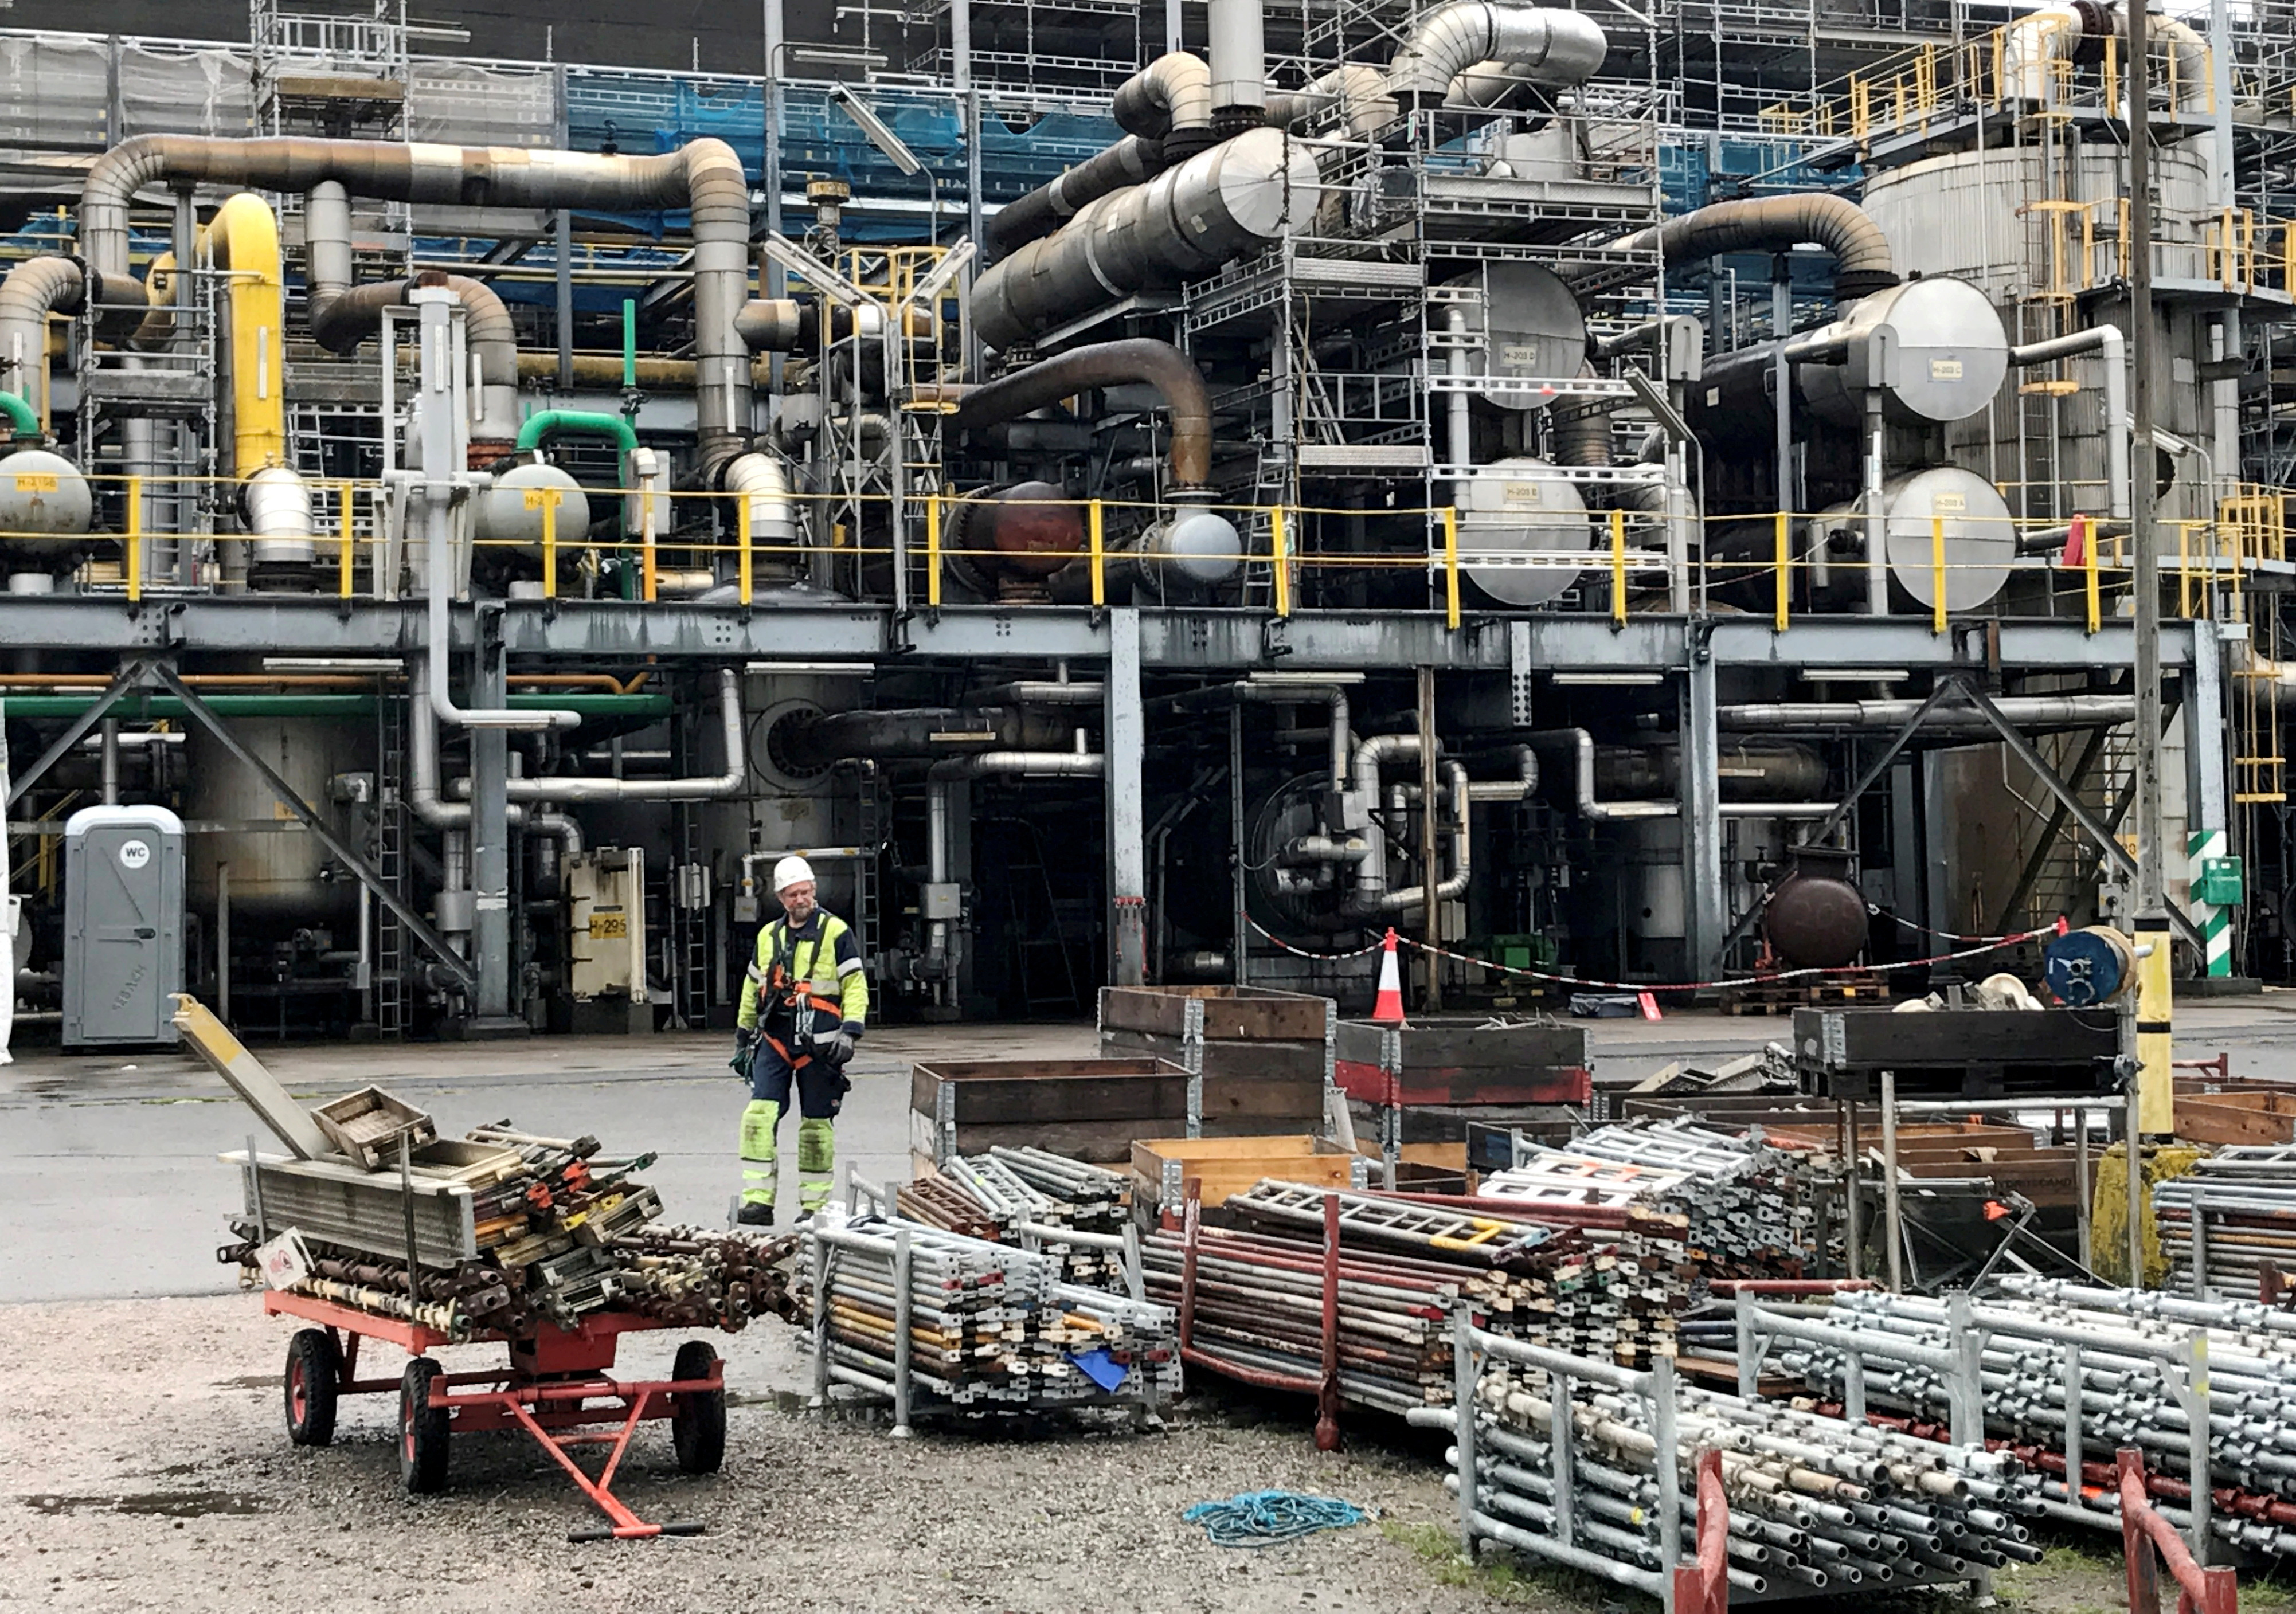 A worker walks at the Yara ammonia plant in Porsgrunn